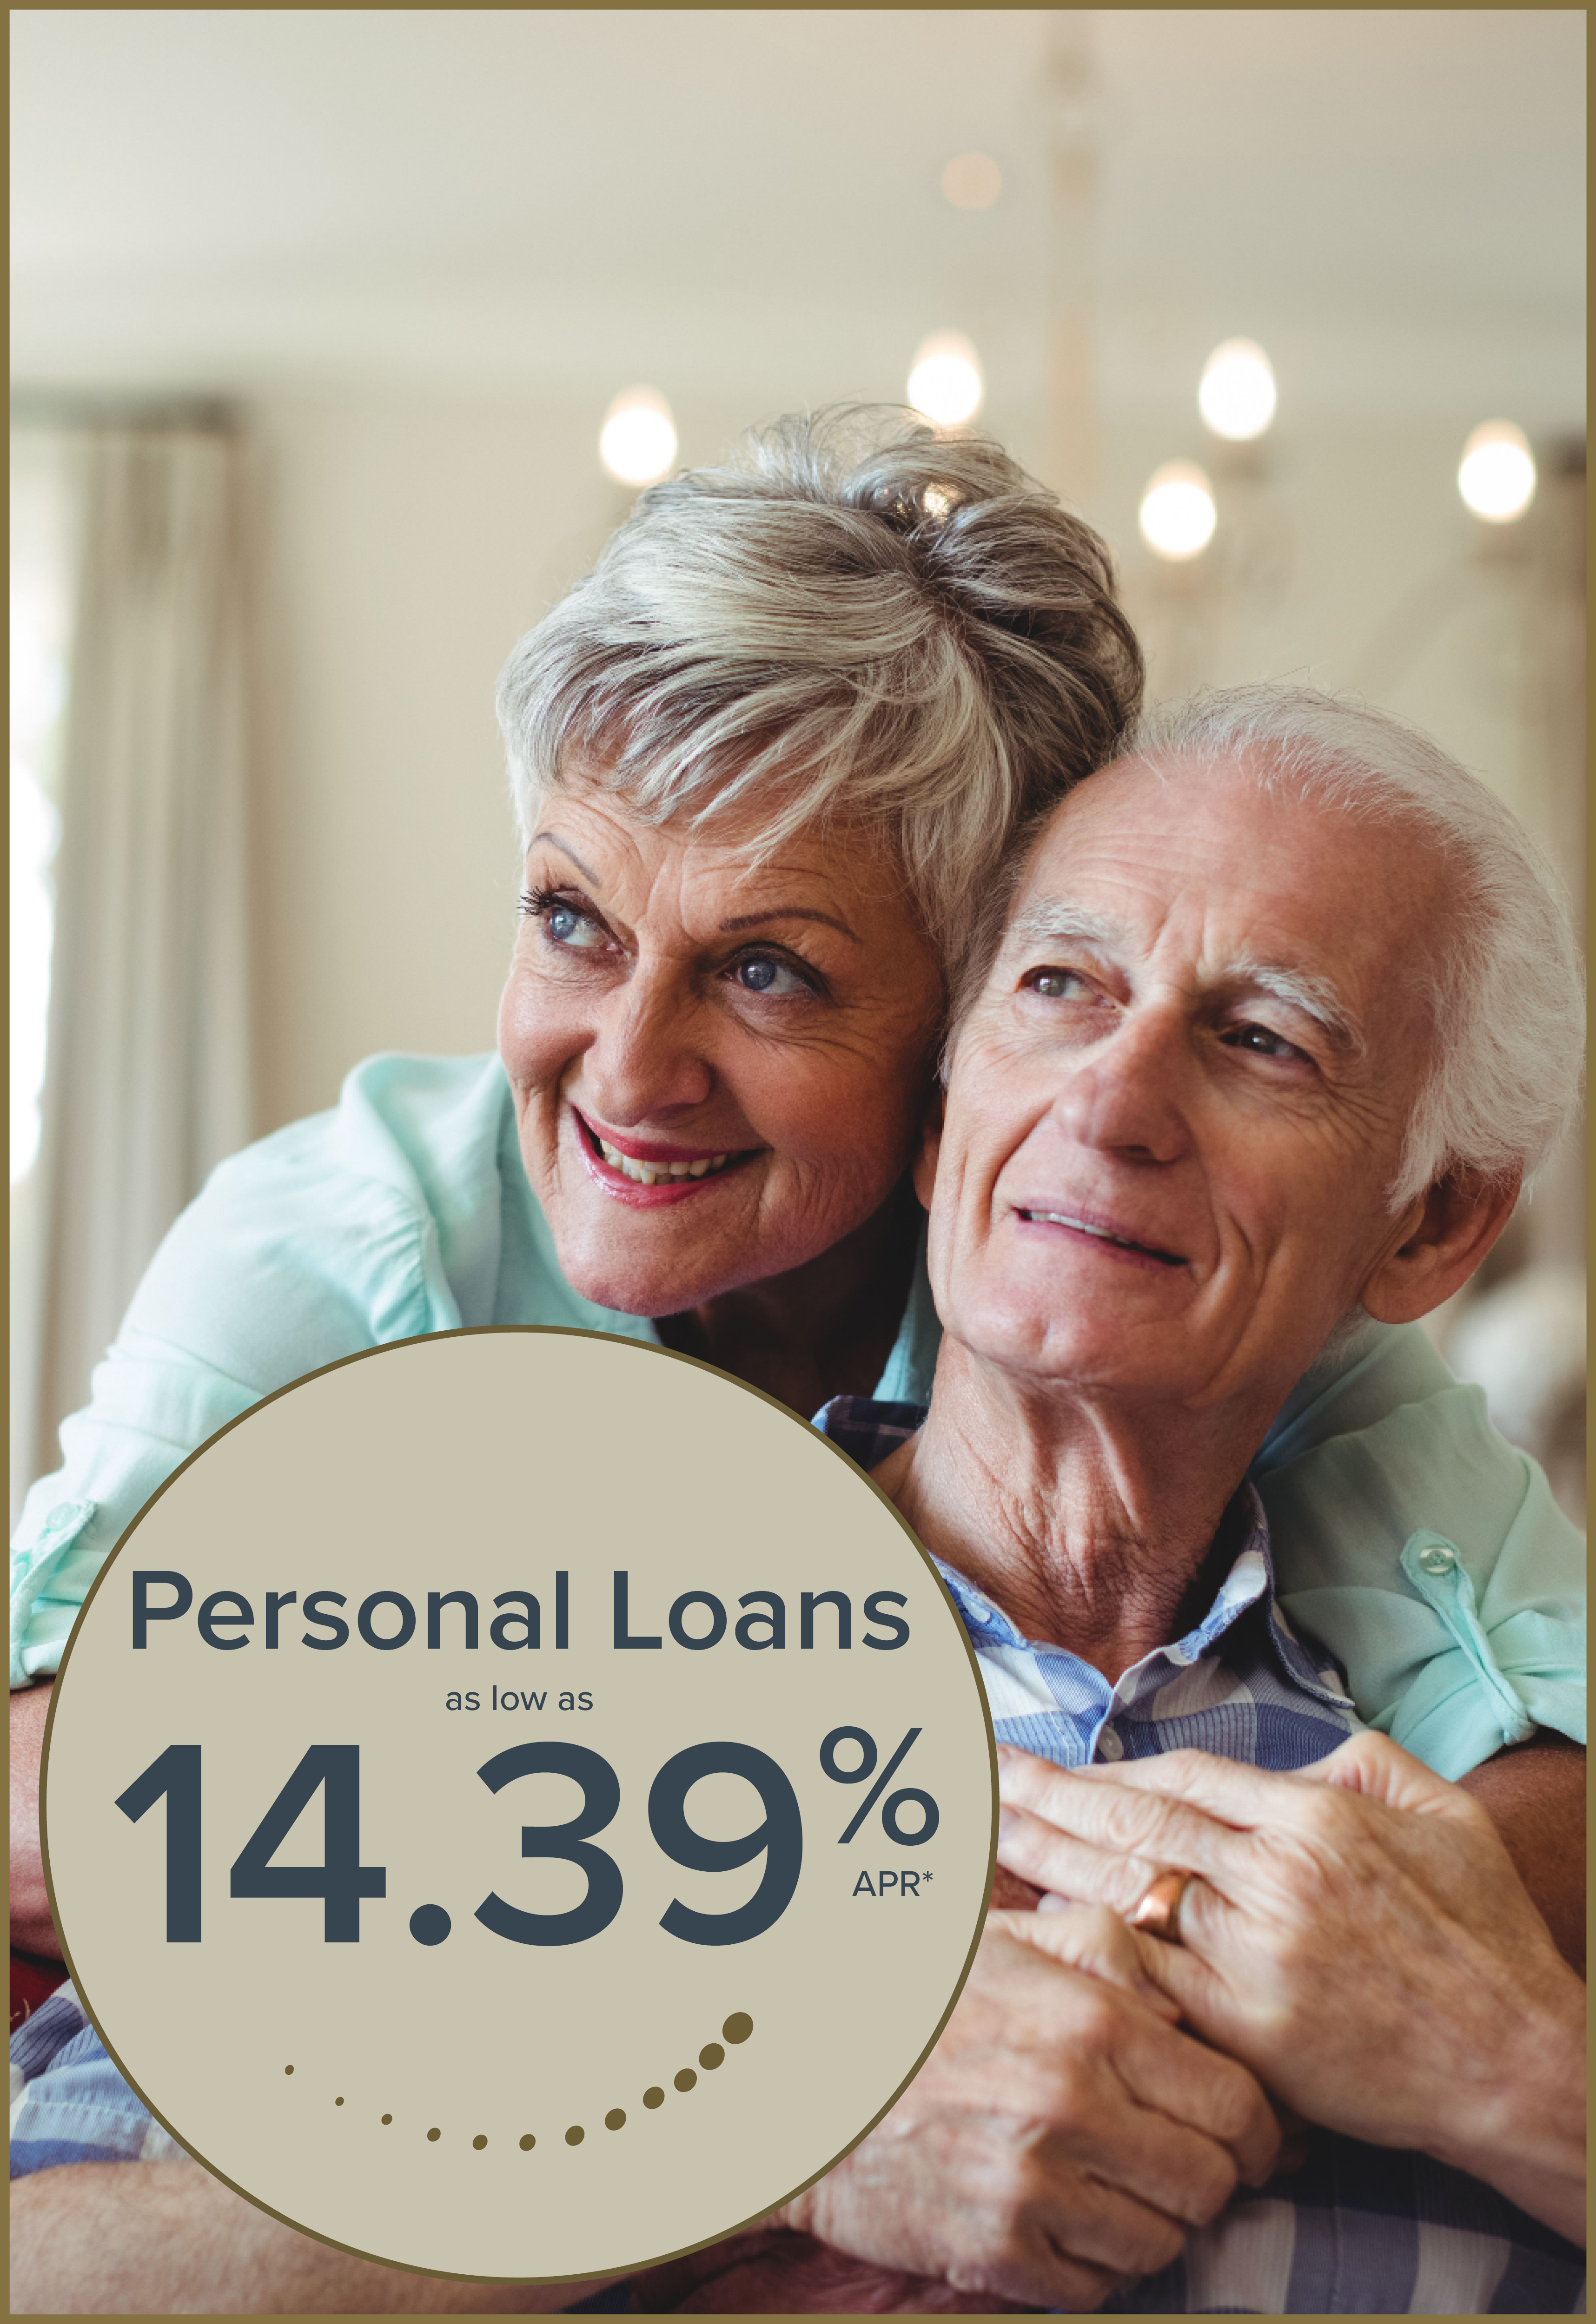 personal loans as low as 14.39% apr